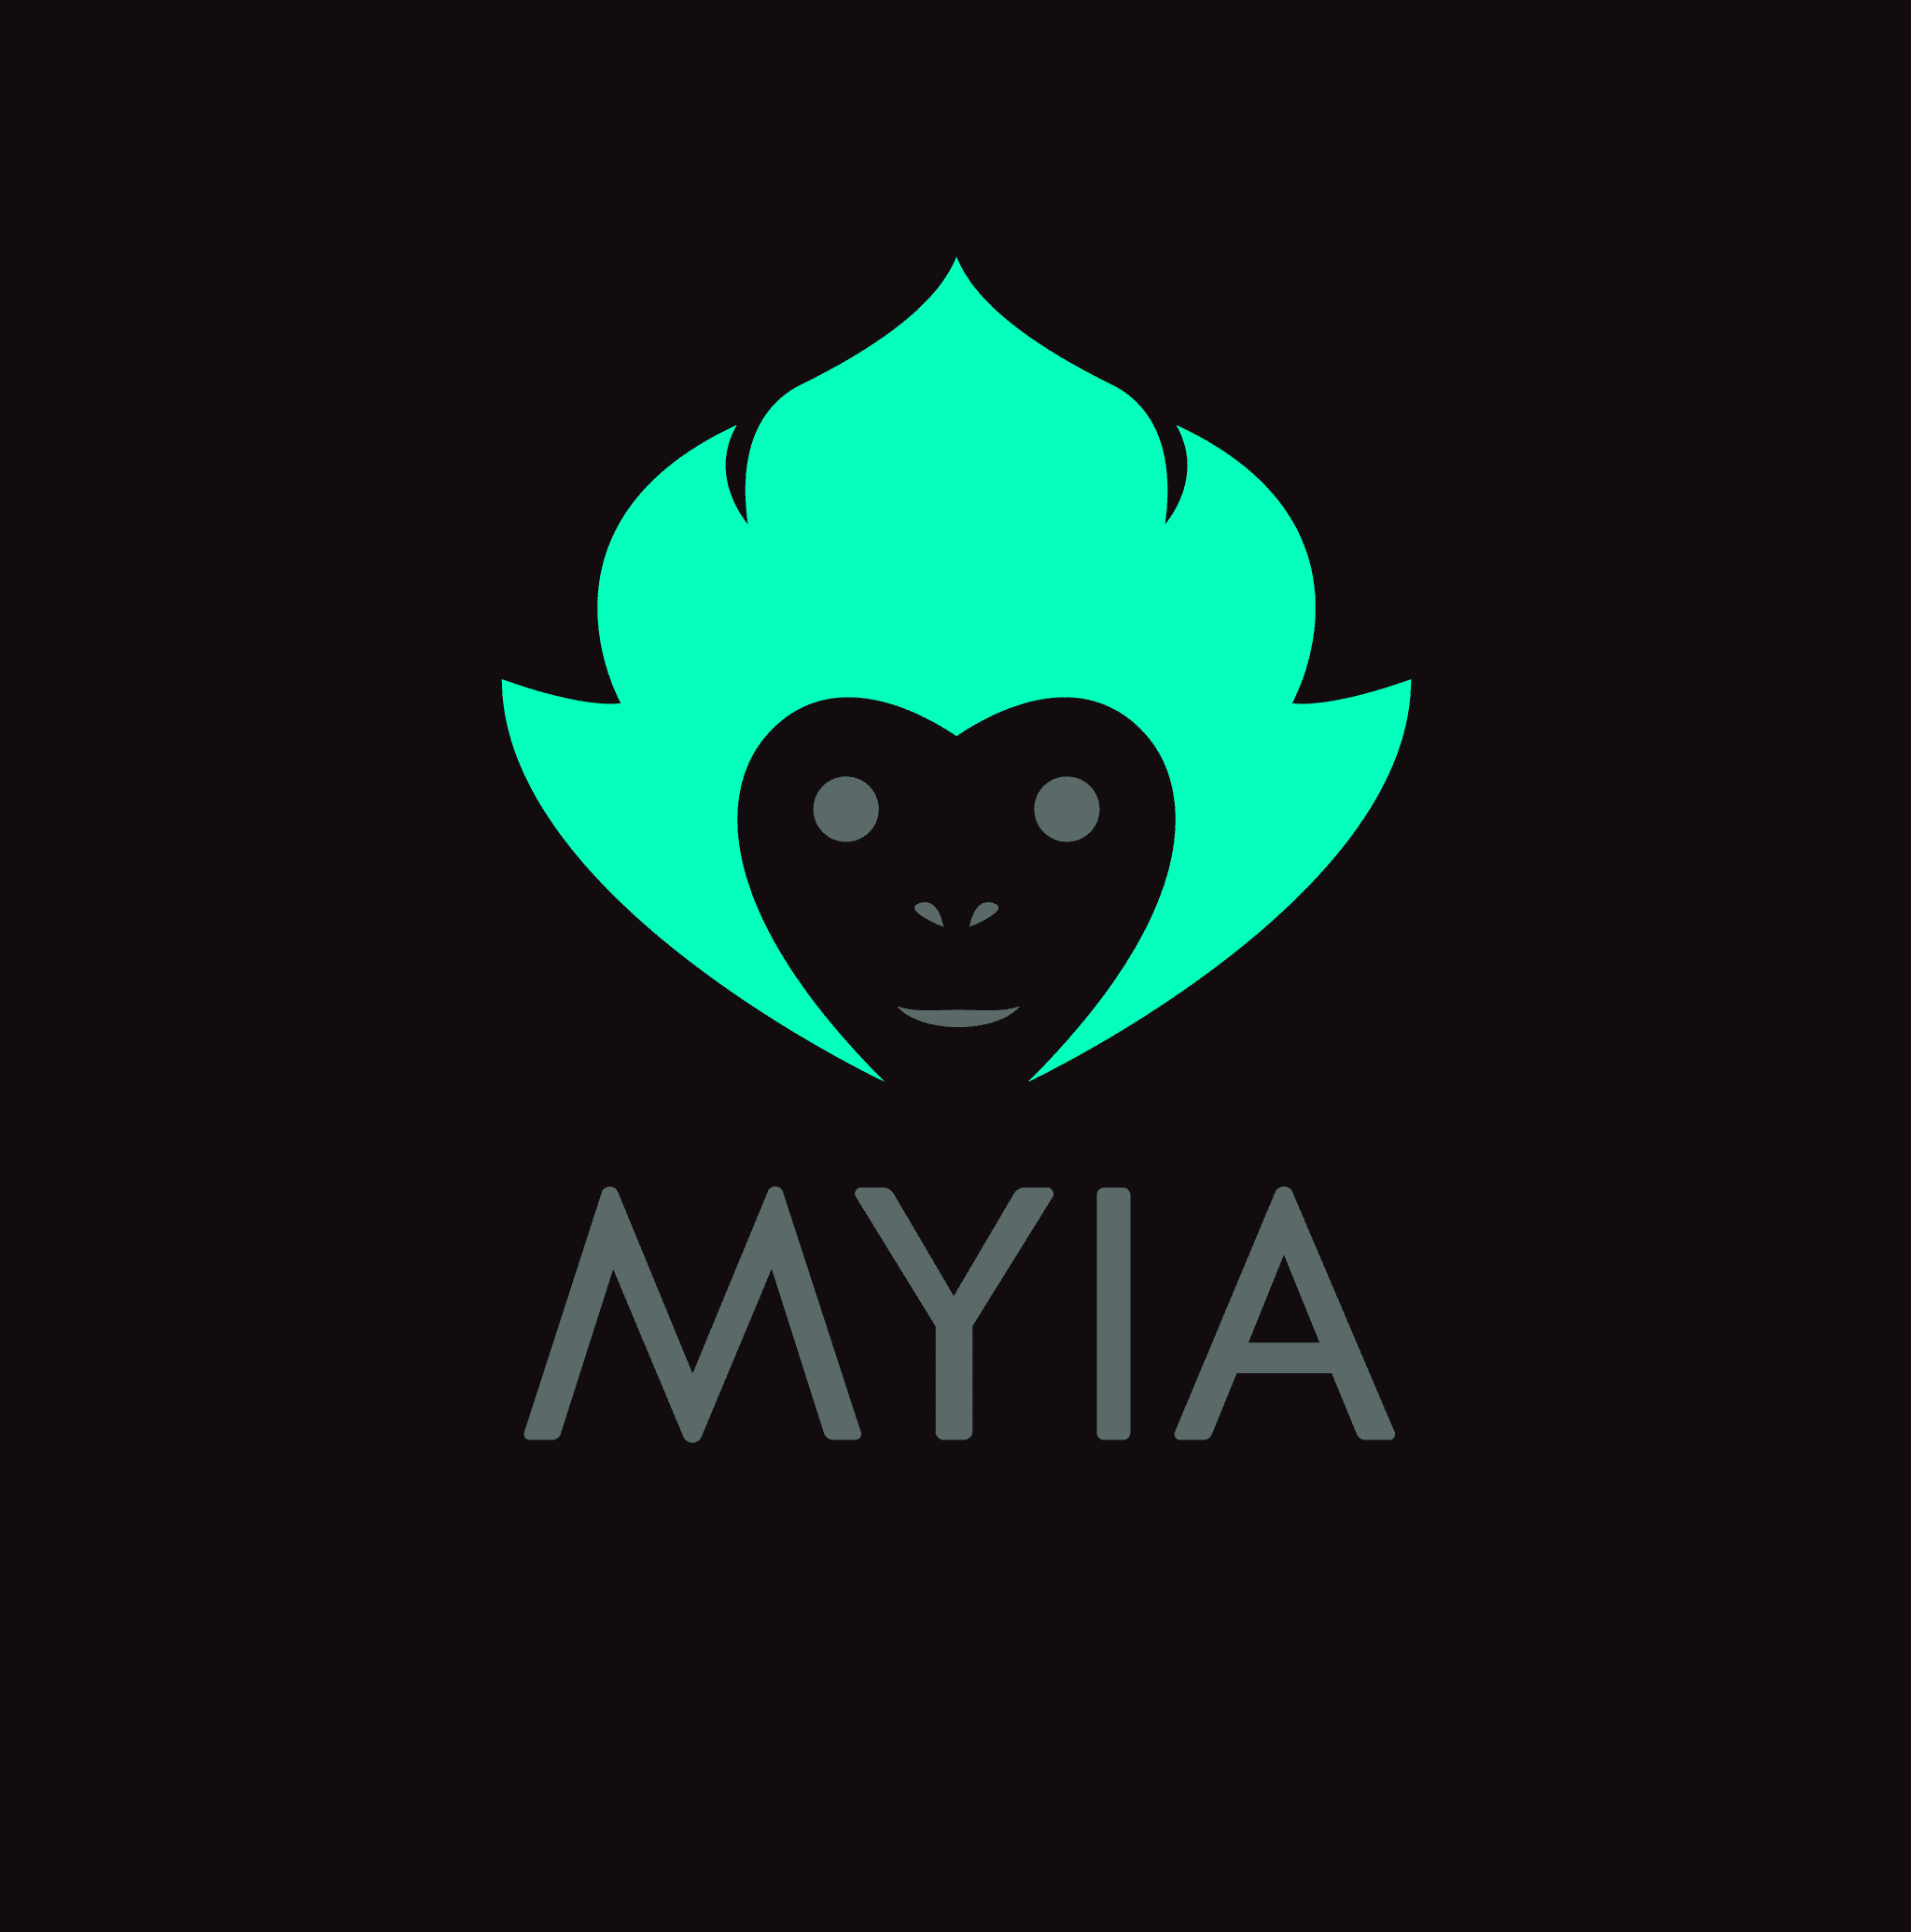 Myia